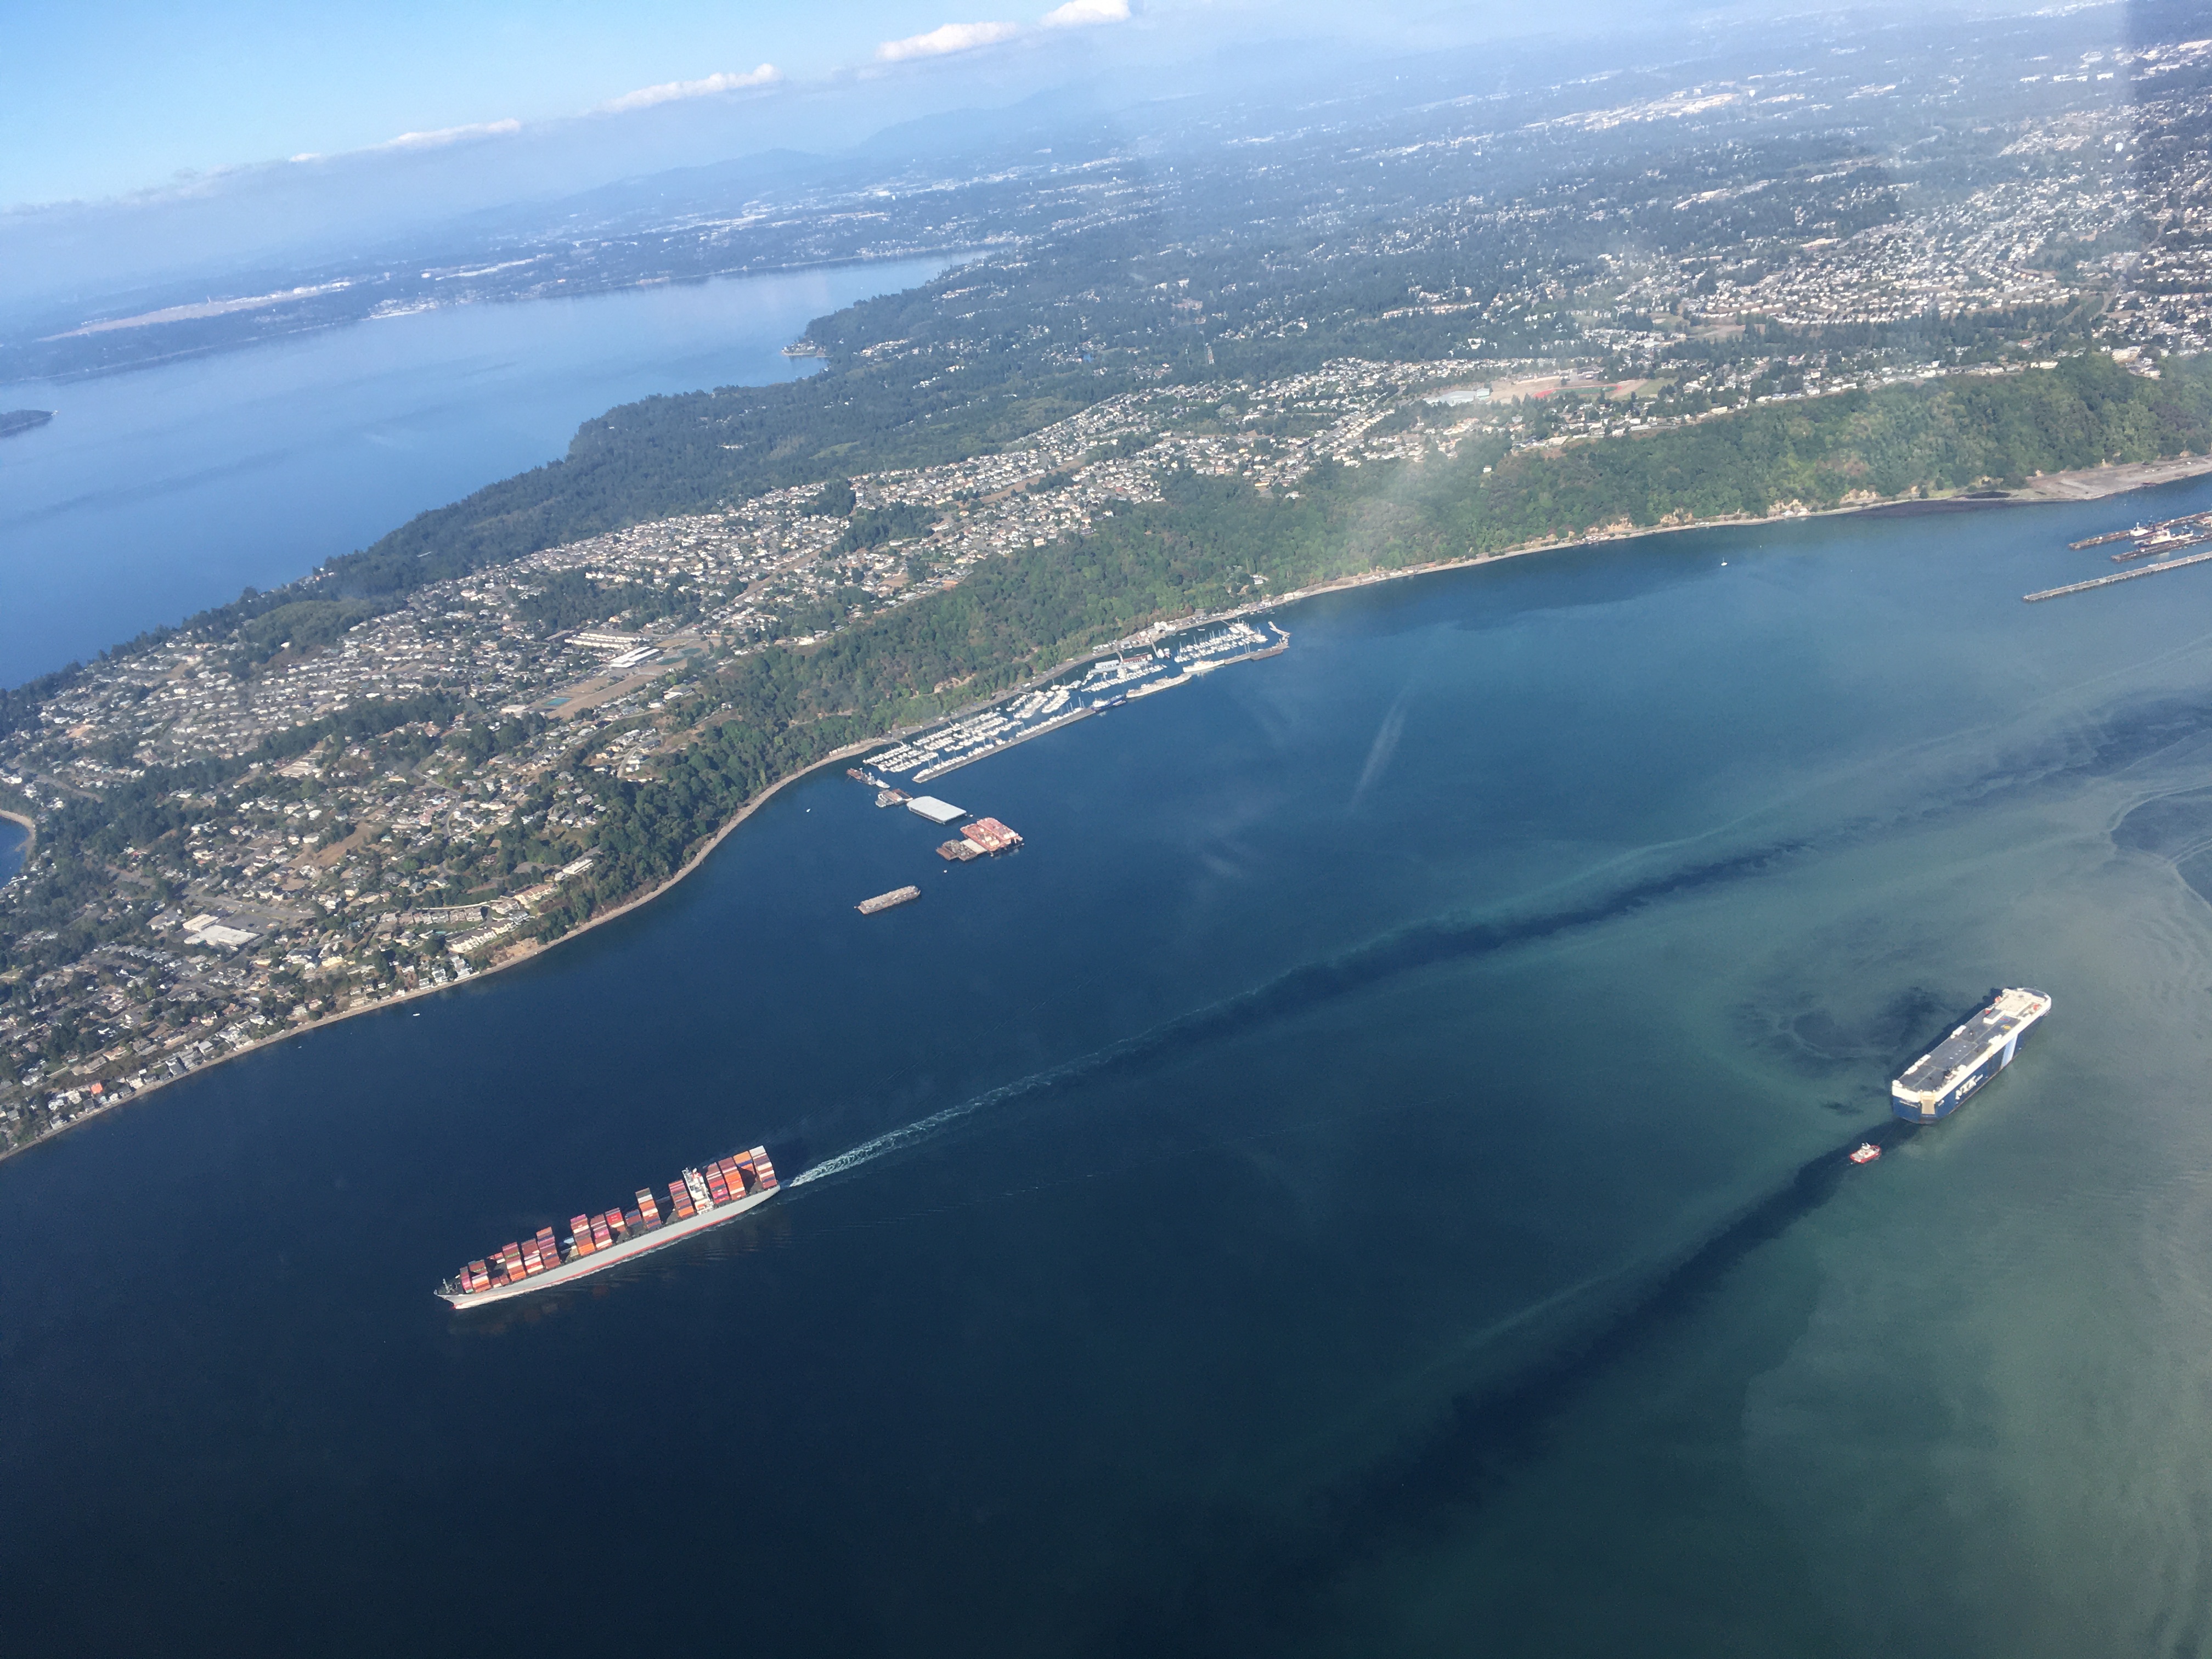 Tacoma area, with cargo ships